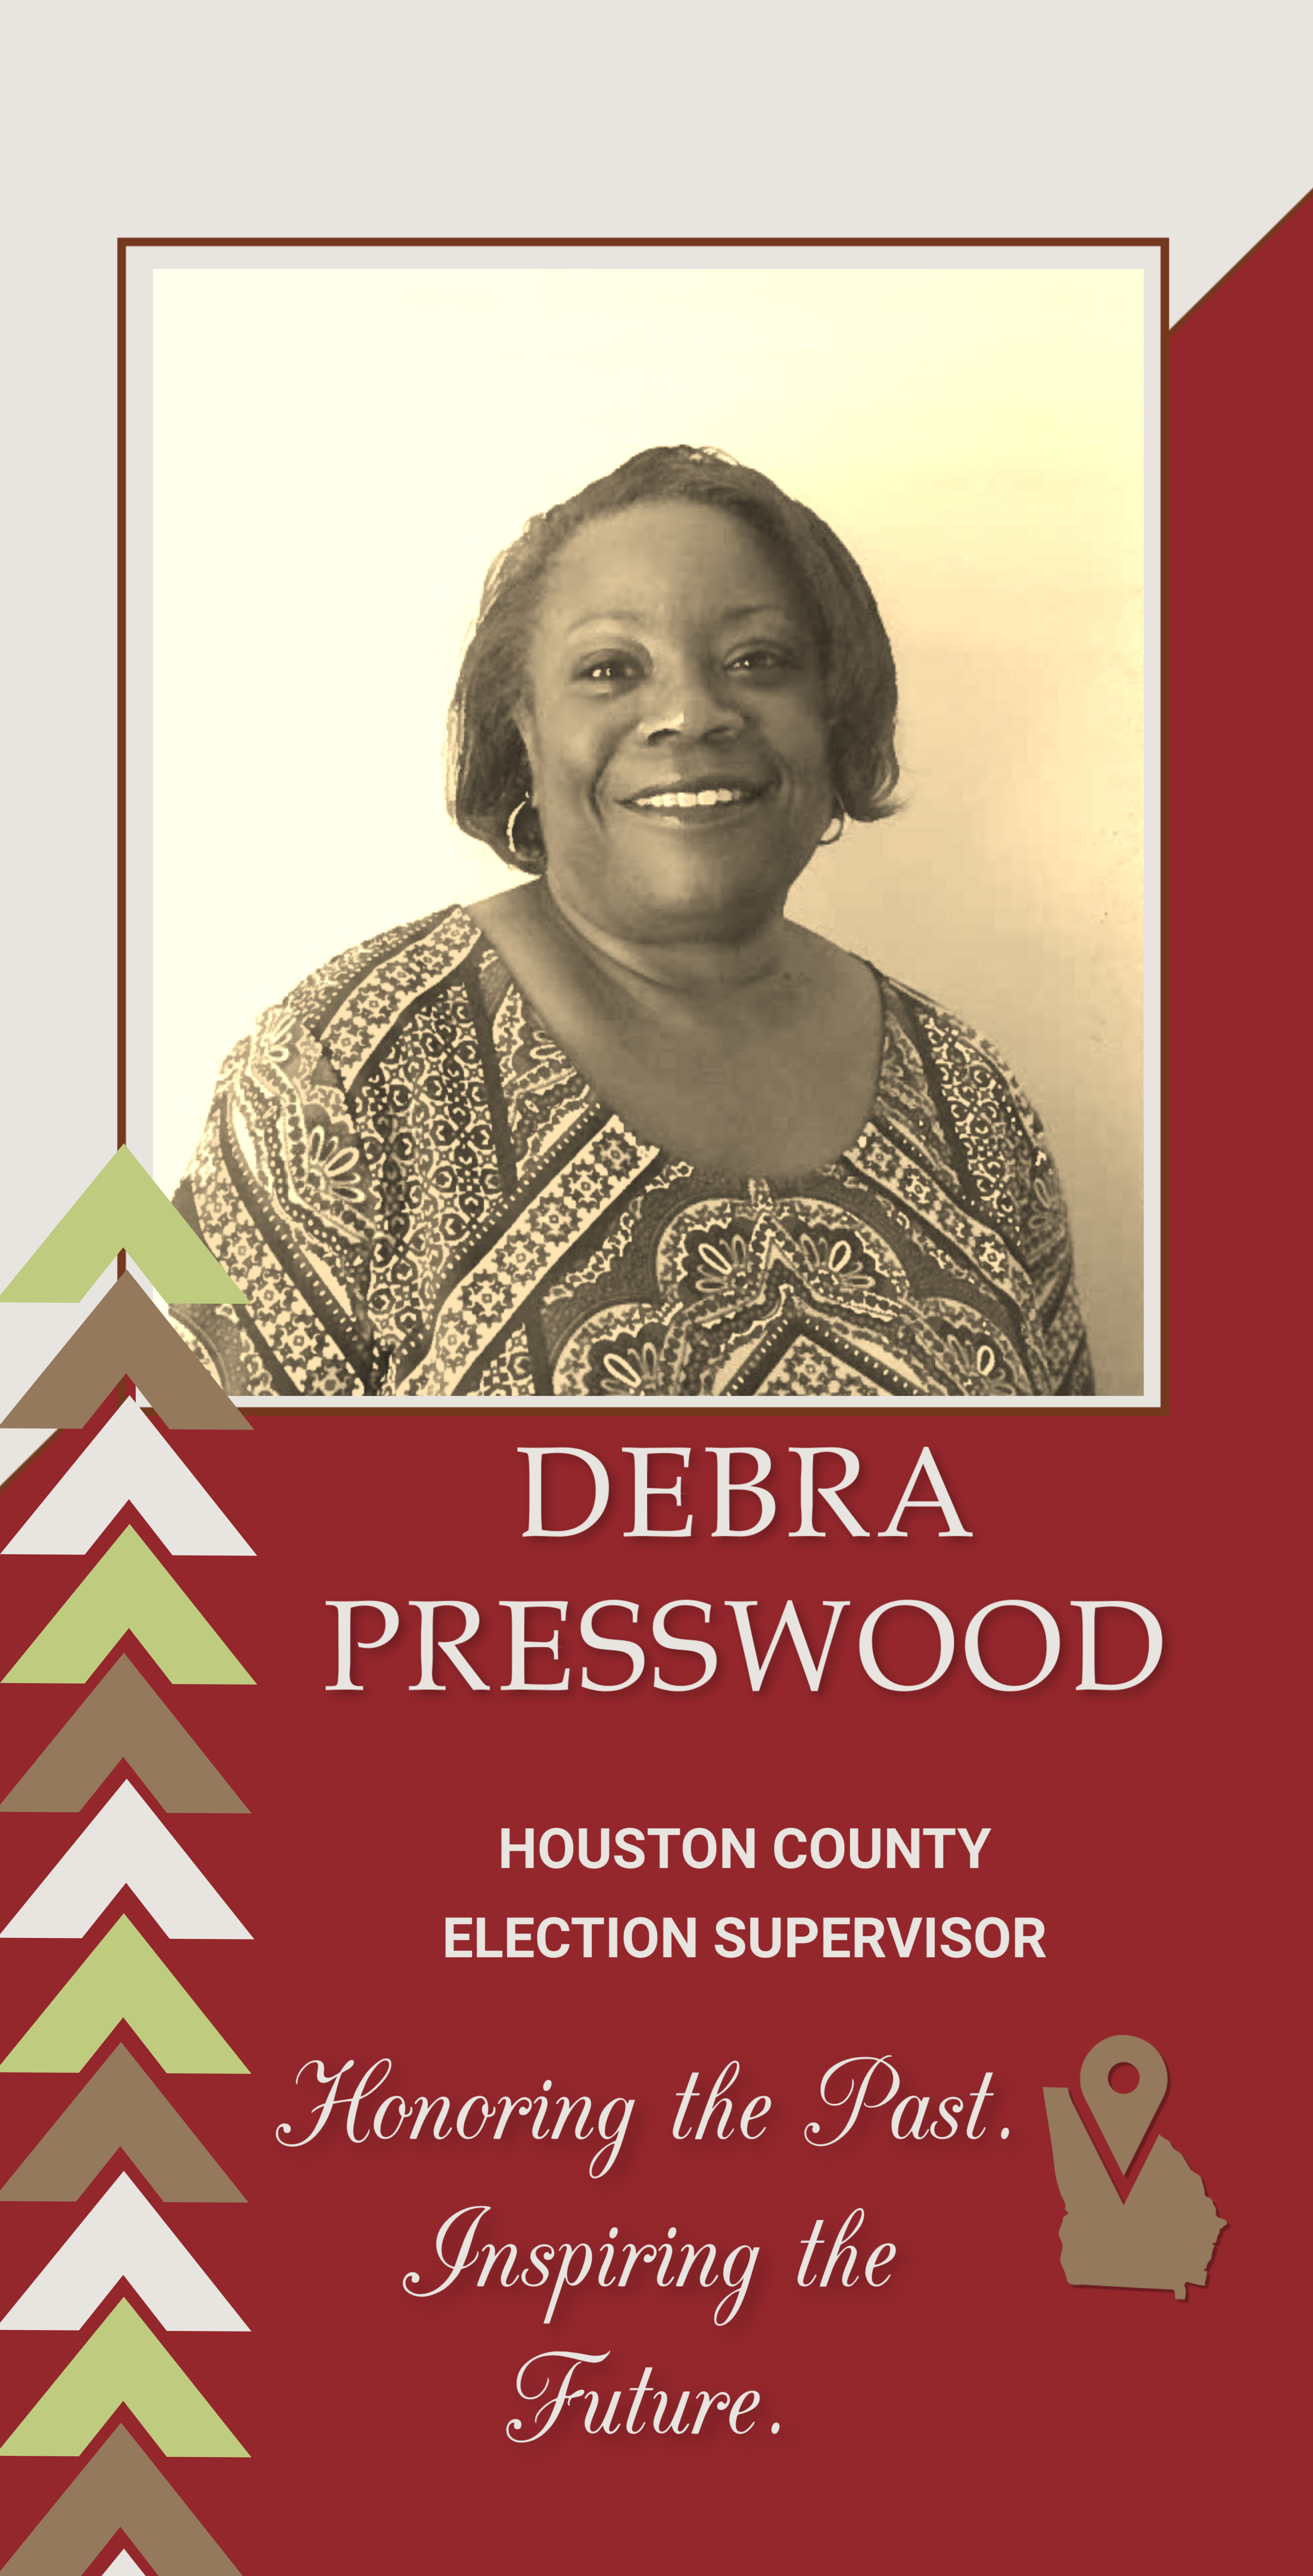 Debra Presswood